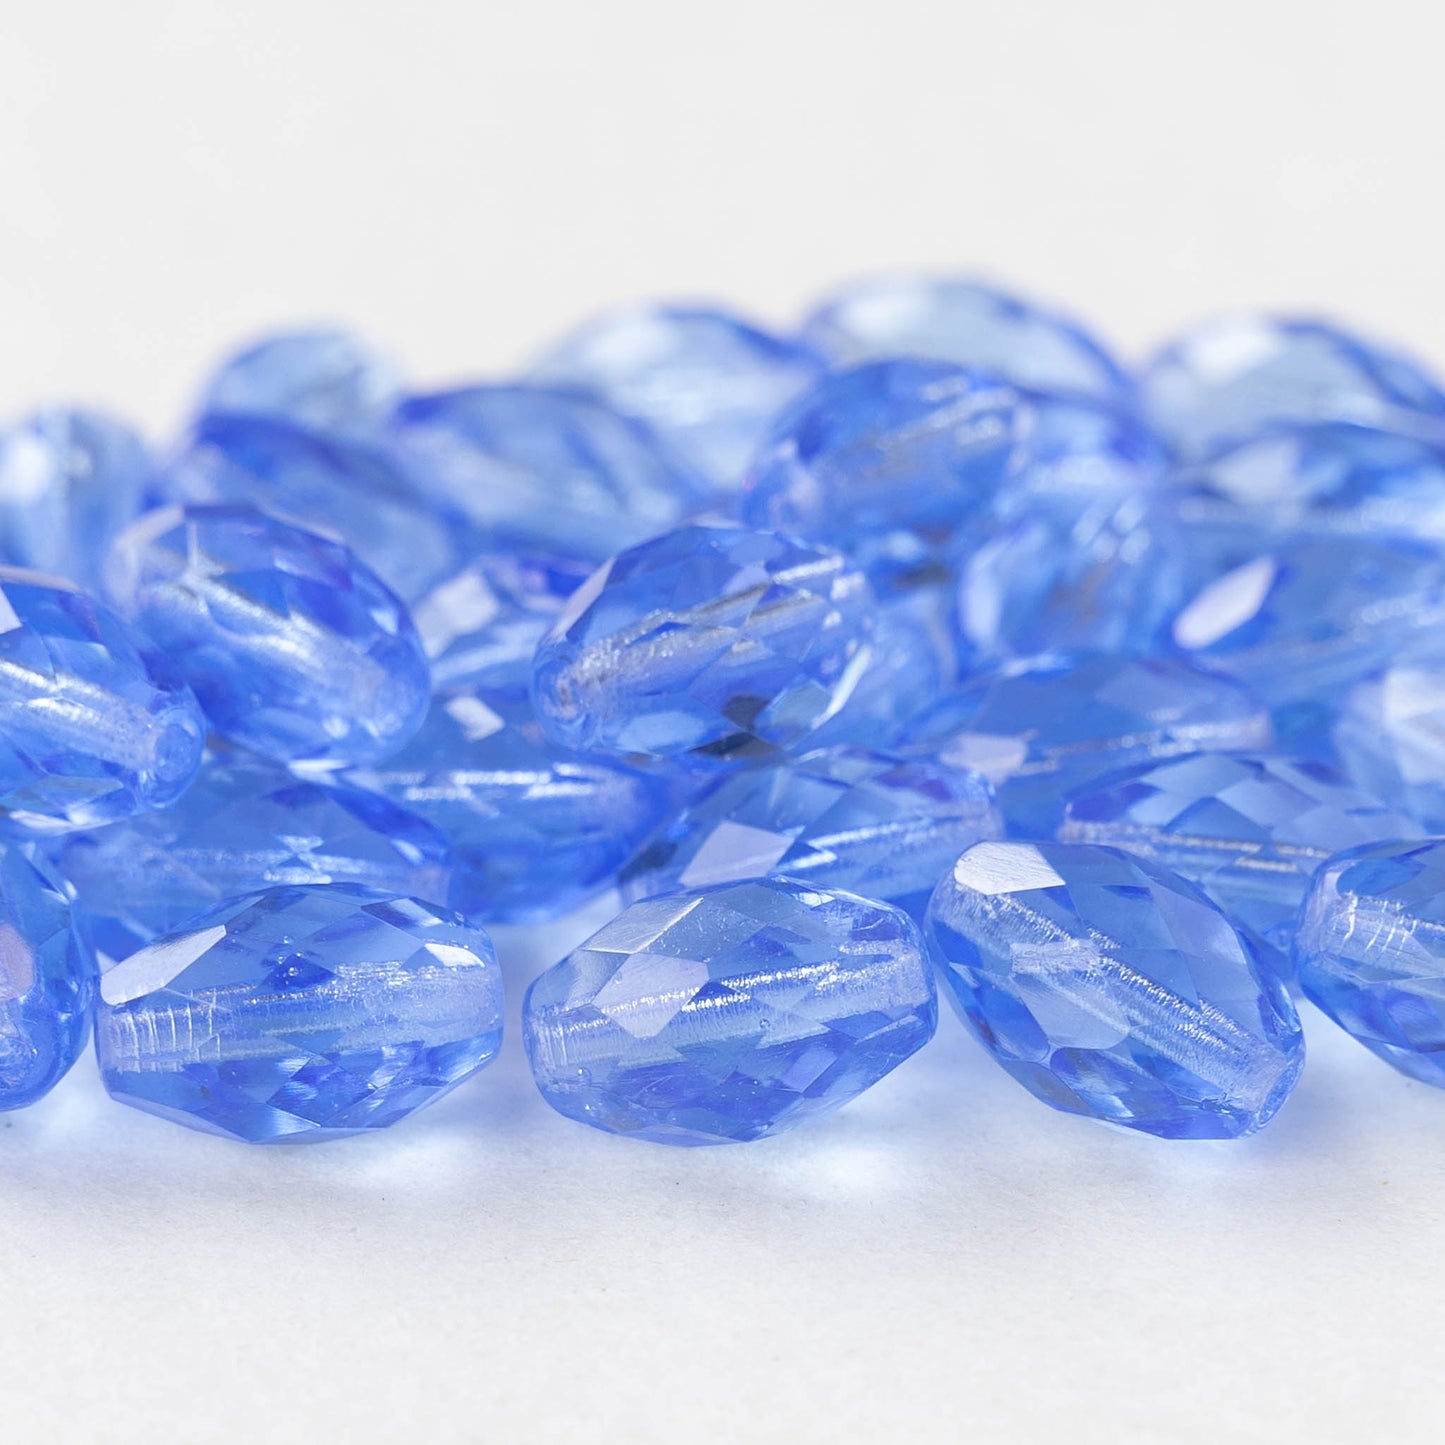 8x12mm Firepolished Glass Oval Beads - Light Sapphire Blue - 10 beads